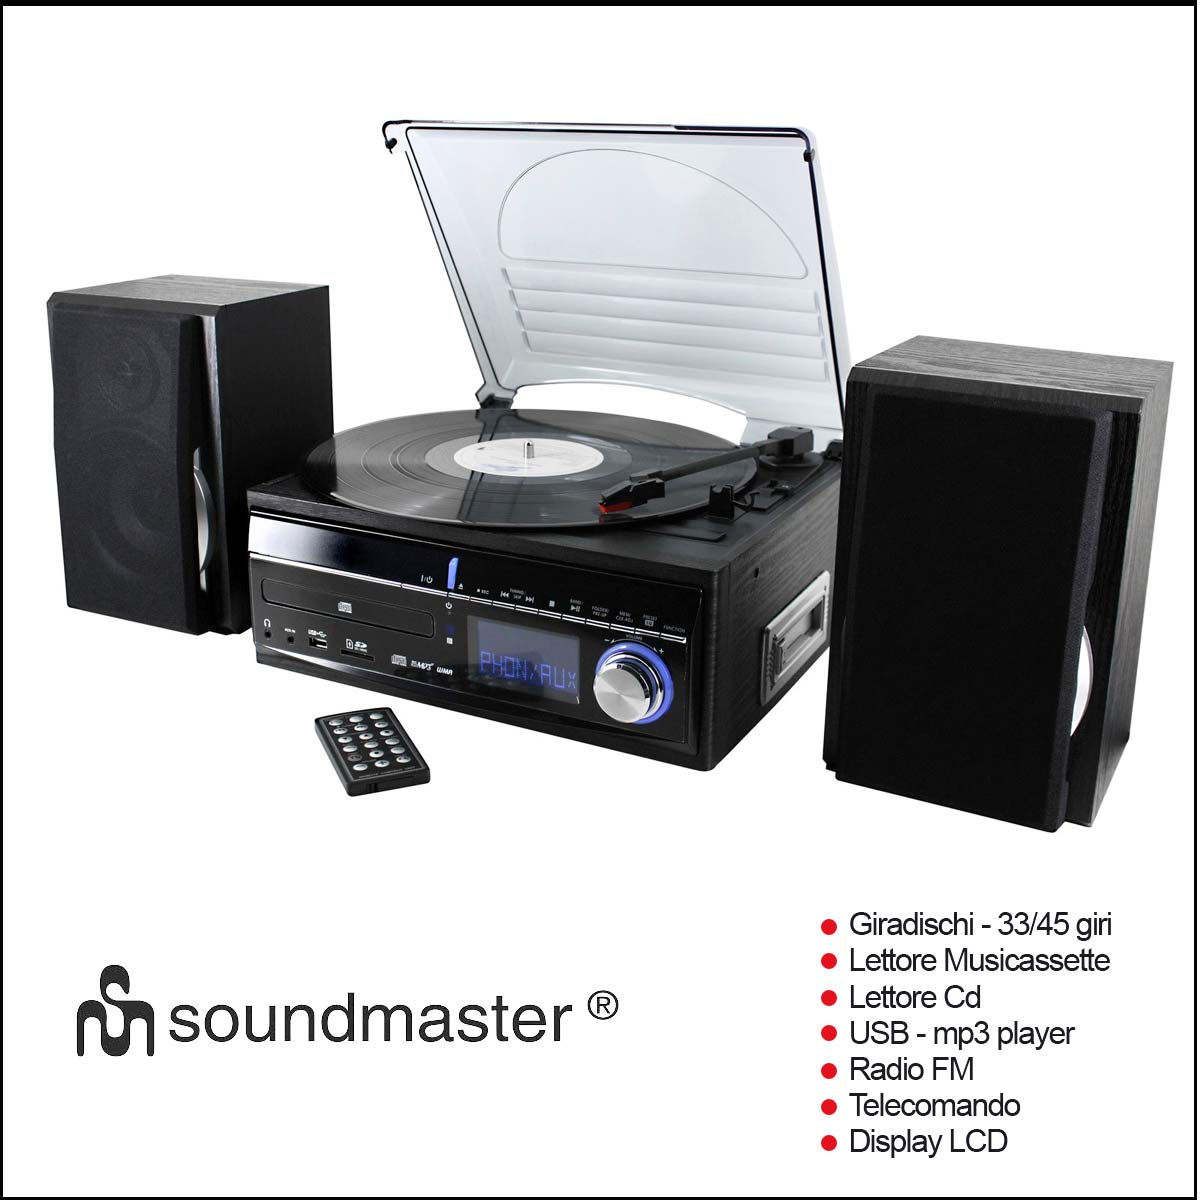 Giradischi Soundmaster mcd1700 - multifunzione cd-radio-usb-musicassette- Semm music store - Bologna